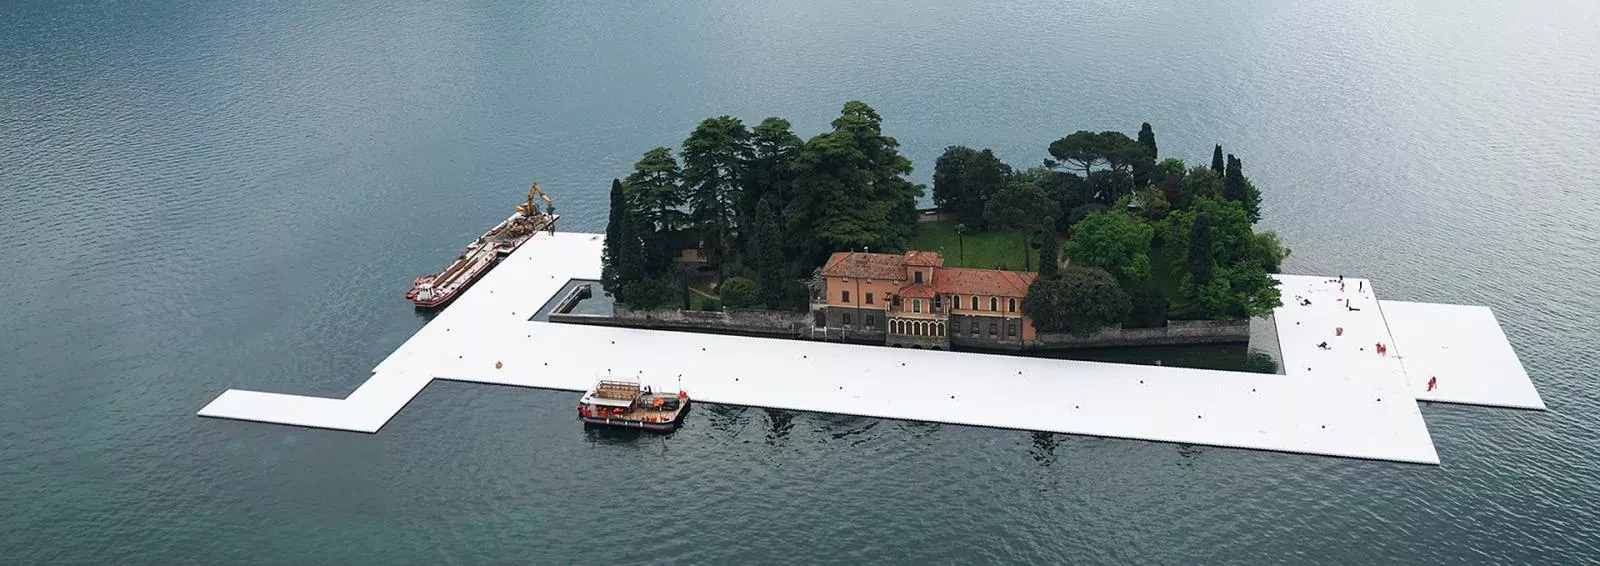 Художник Христо на озере в Италии: прогулки по воде